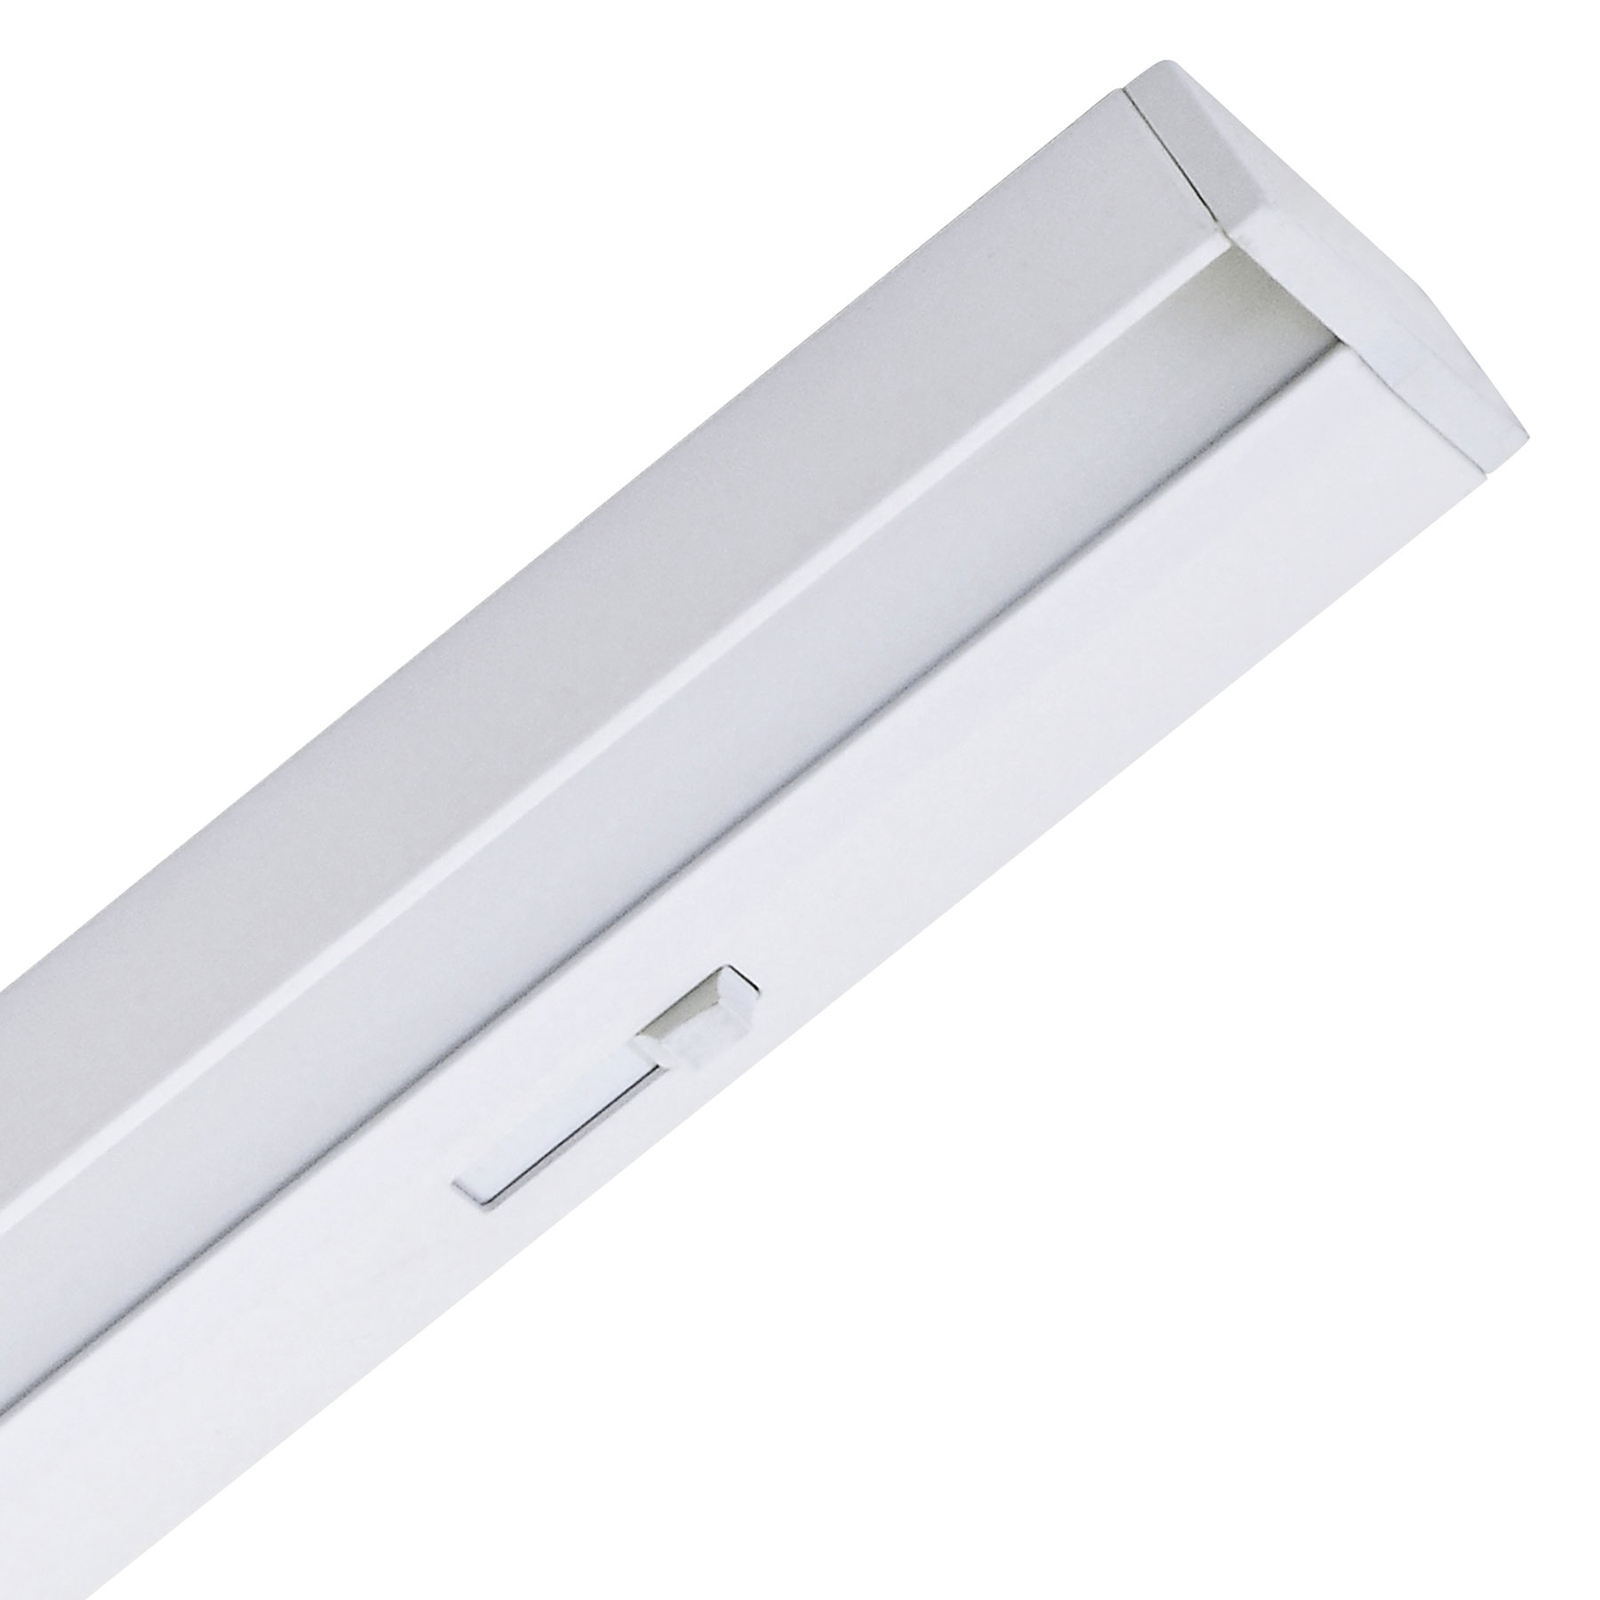 Conero DIM under-cabinet lamp direct connection 60cm white